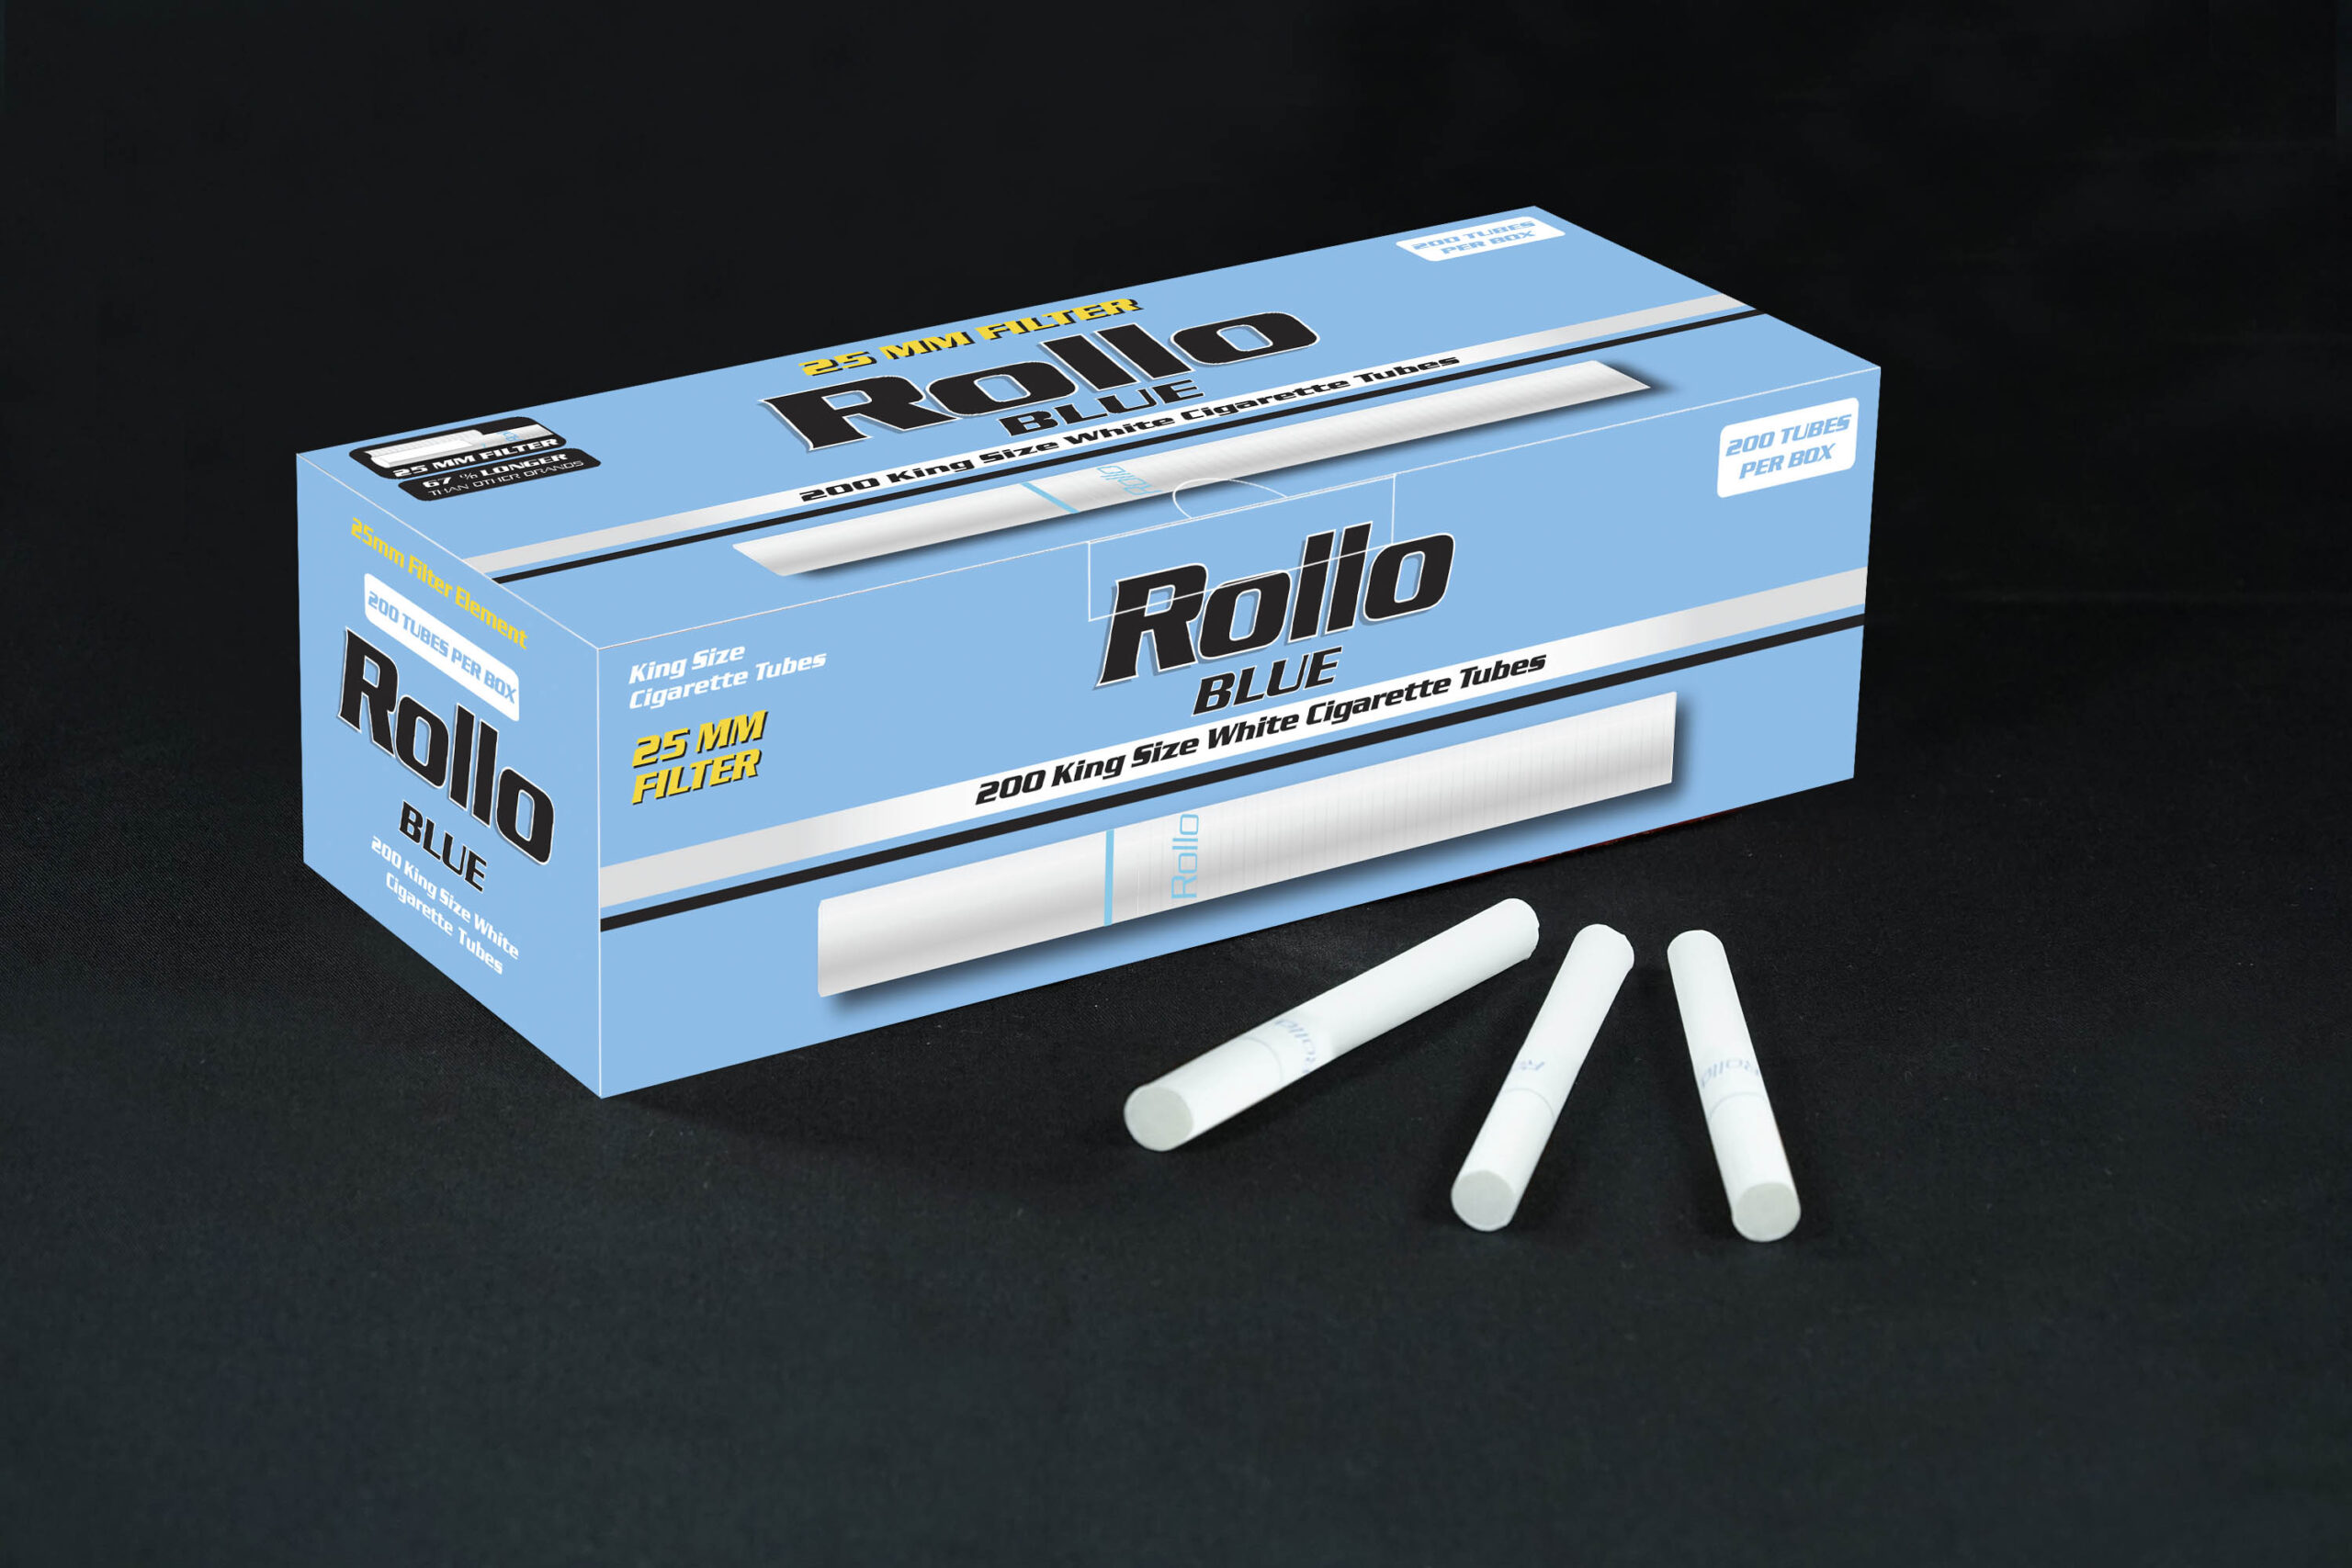 Cigarette Tubes Rollo Blue 200 CT 25mm filter length